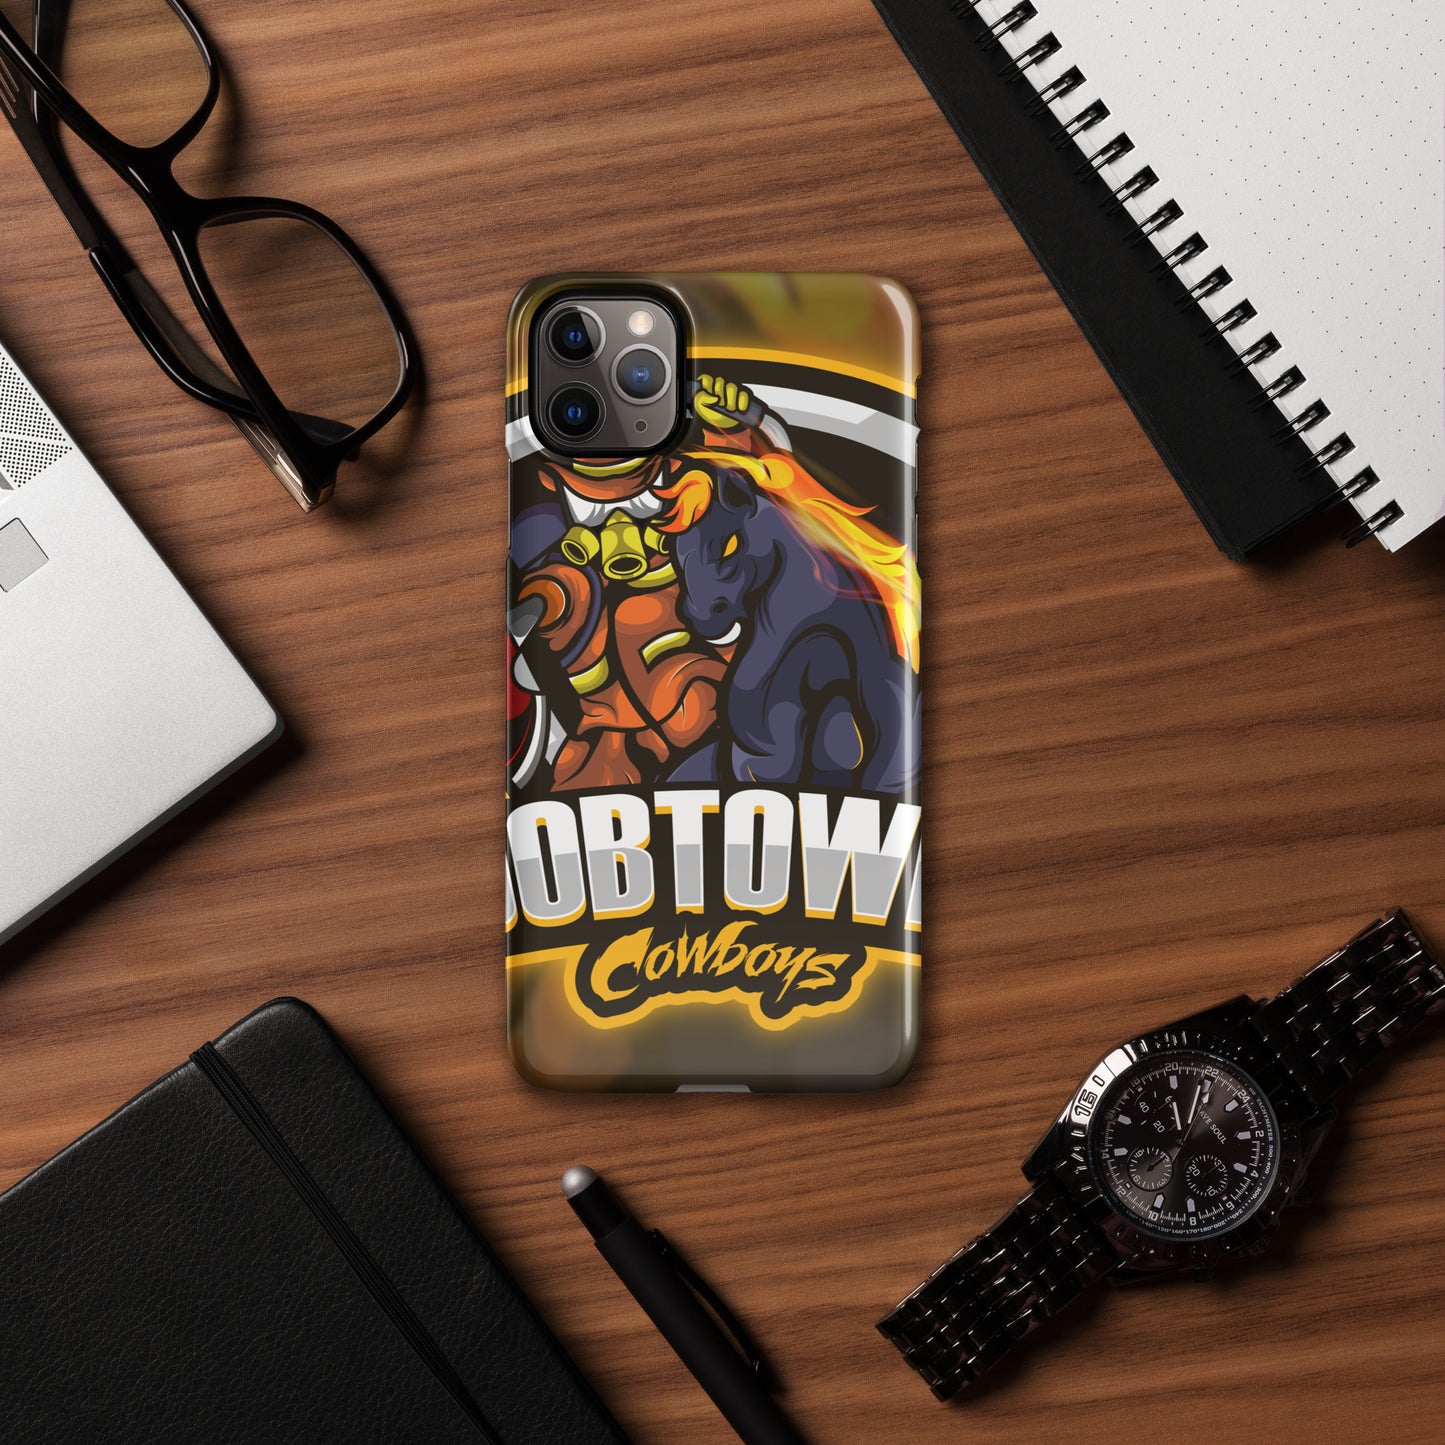 Jobtown Cowboys Firefighter Snap case for iPhone®- The Original Design